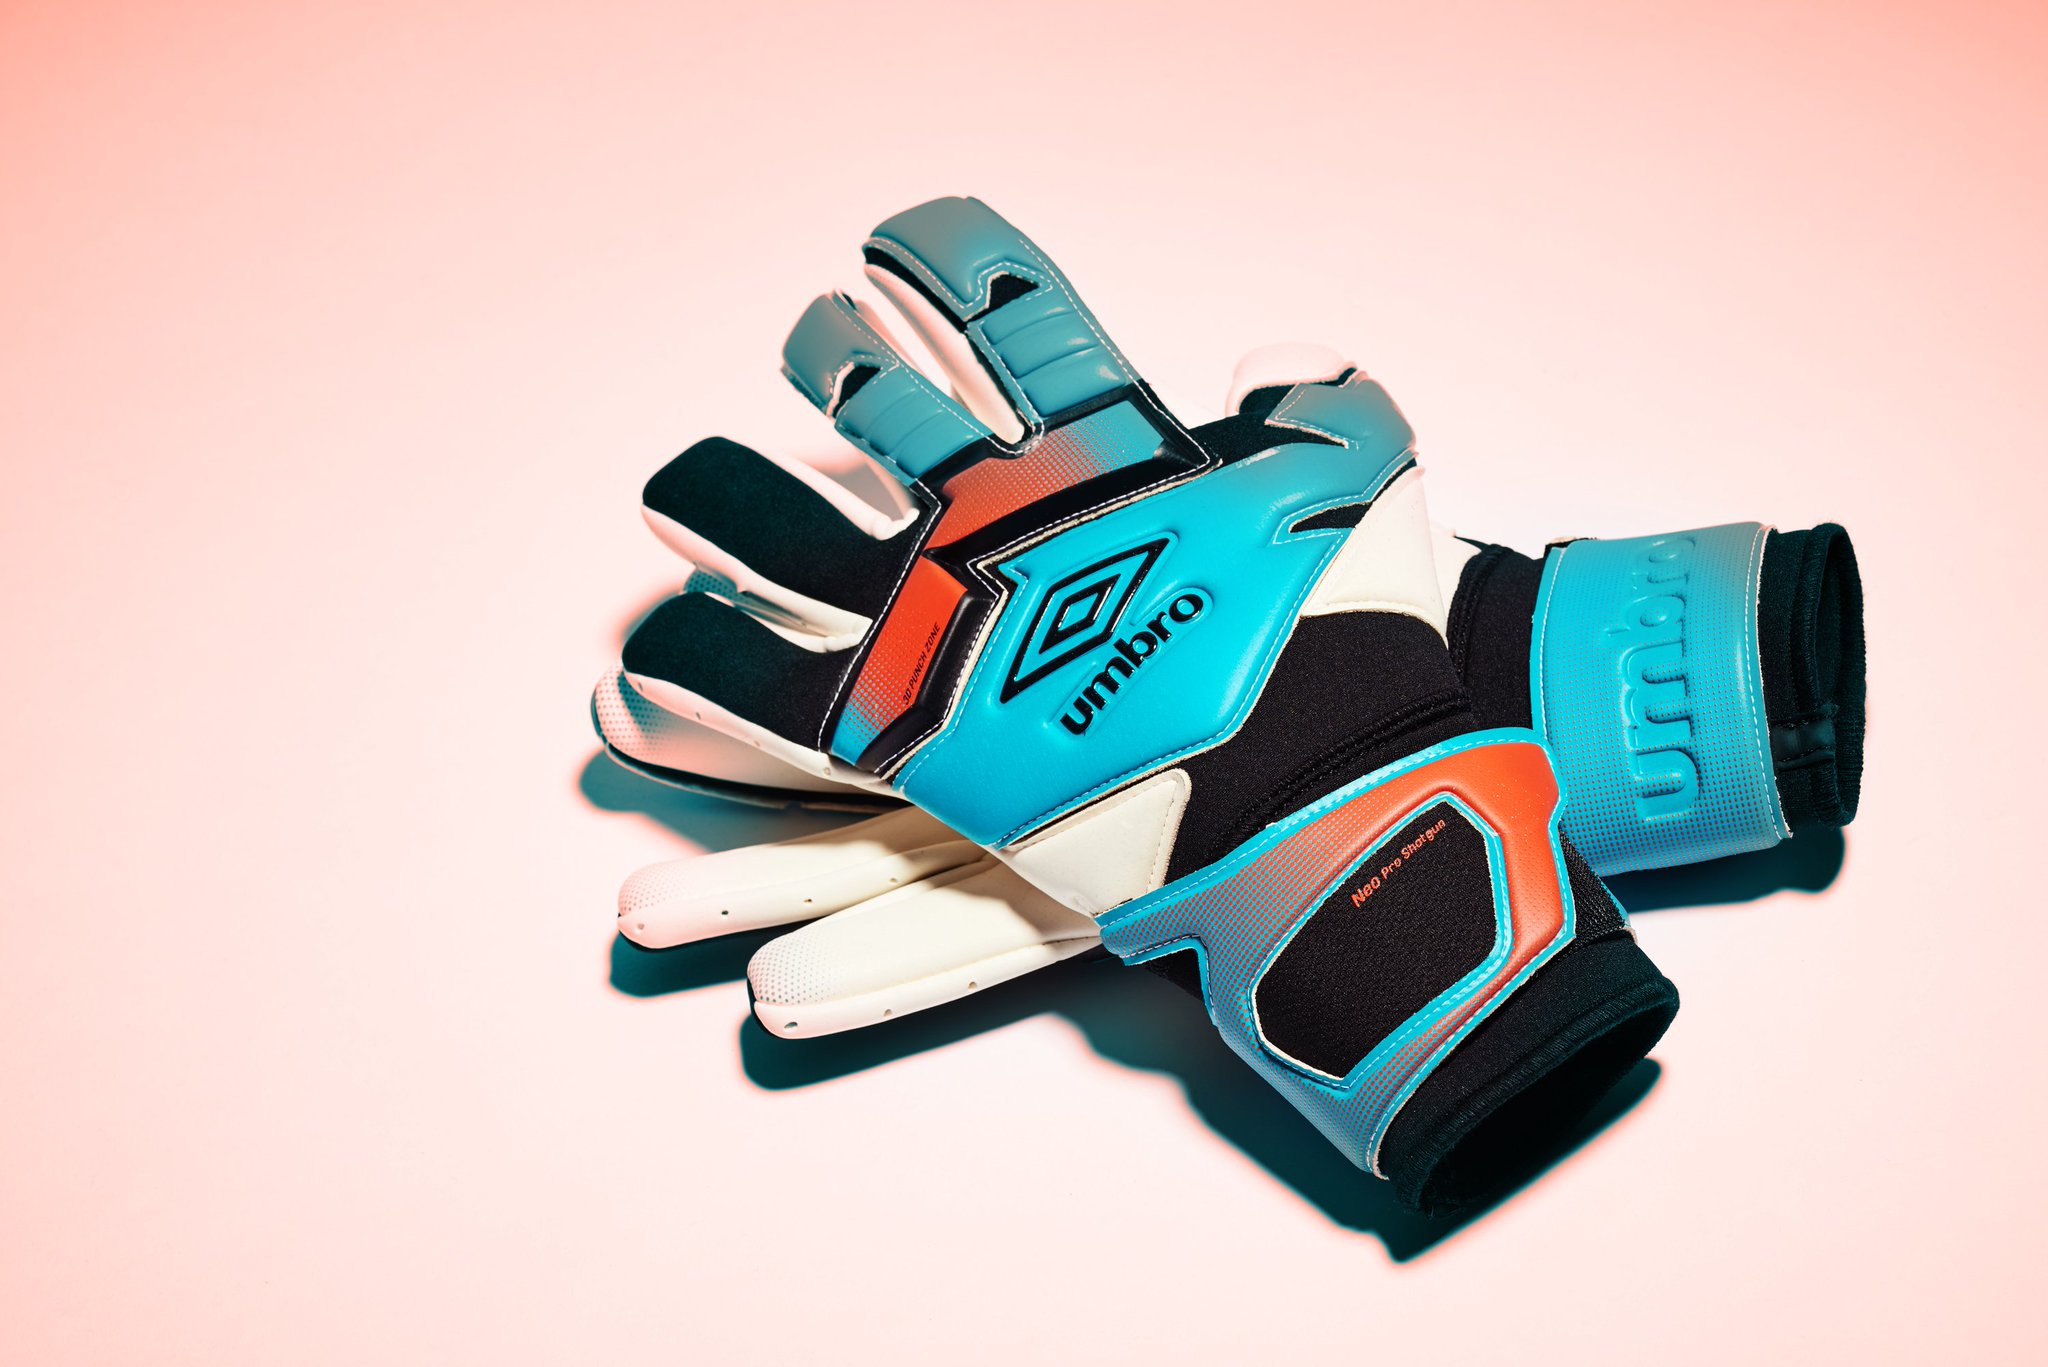 Umbro Gloves Galore Introducing The Umbro Neo Pro Shotgun In Bluebird Grenadine Black Save Everything This Season